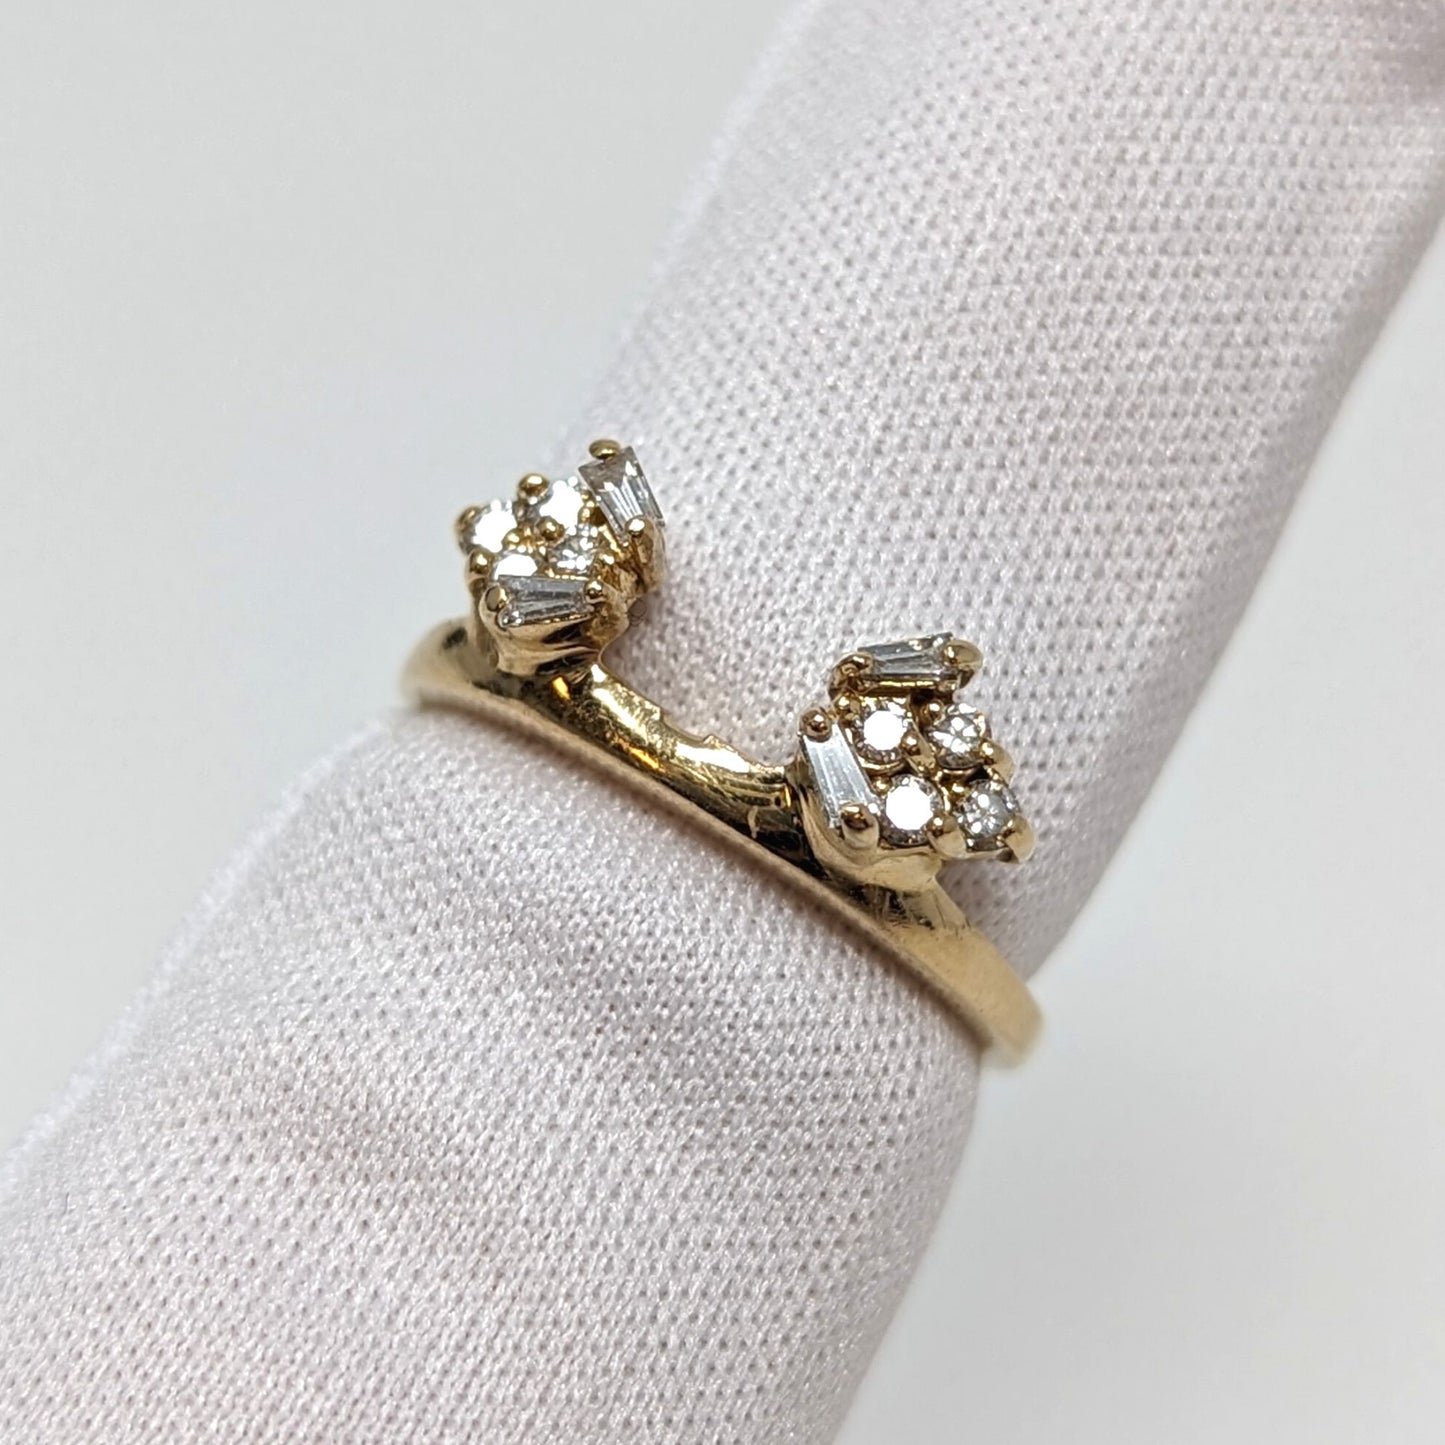 14K Gold .33TCW Diamond Wedding Wrap Ring - Size 5.75